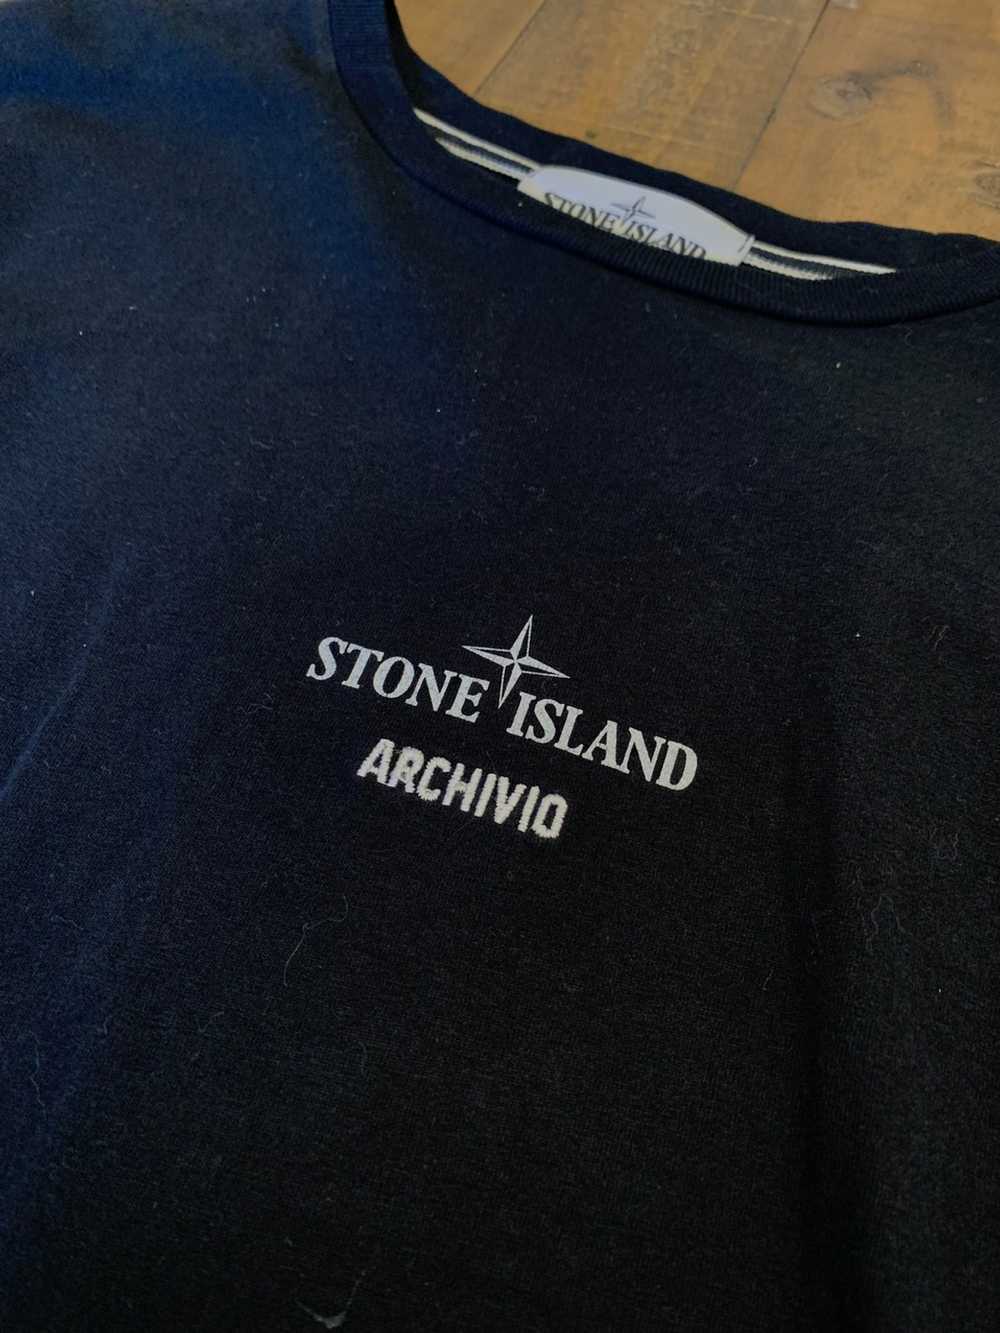 Stone Island Stone Island Archivio - image 5